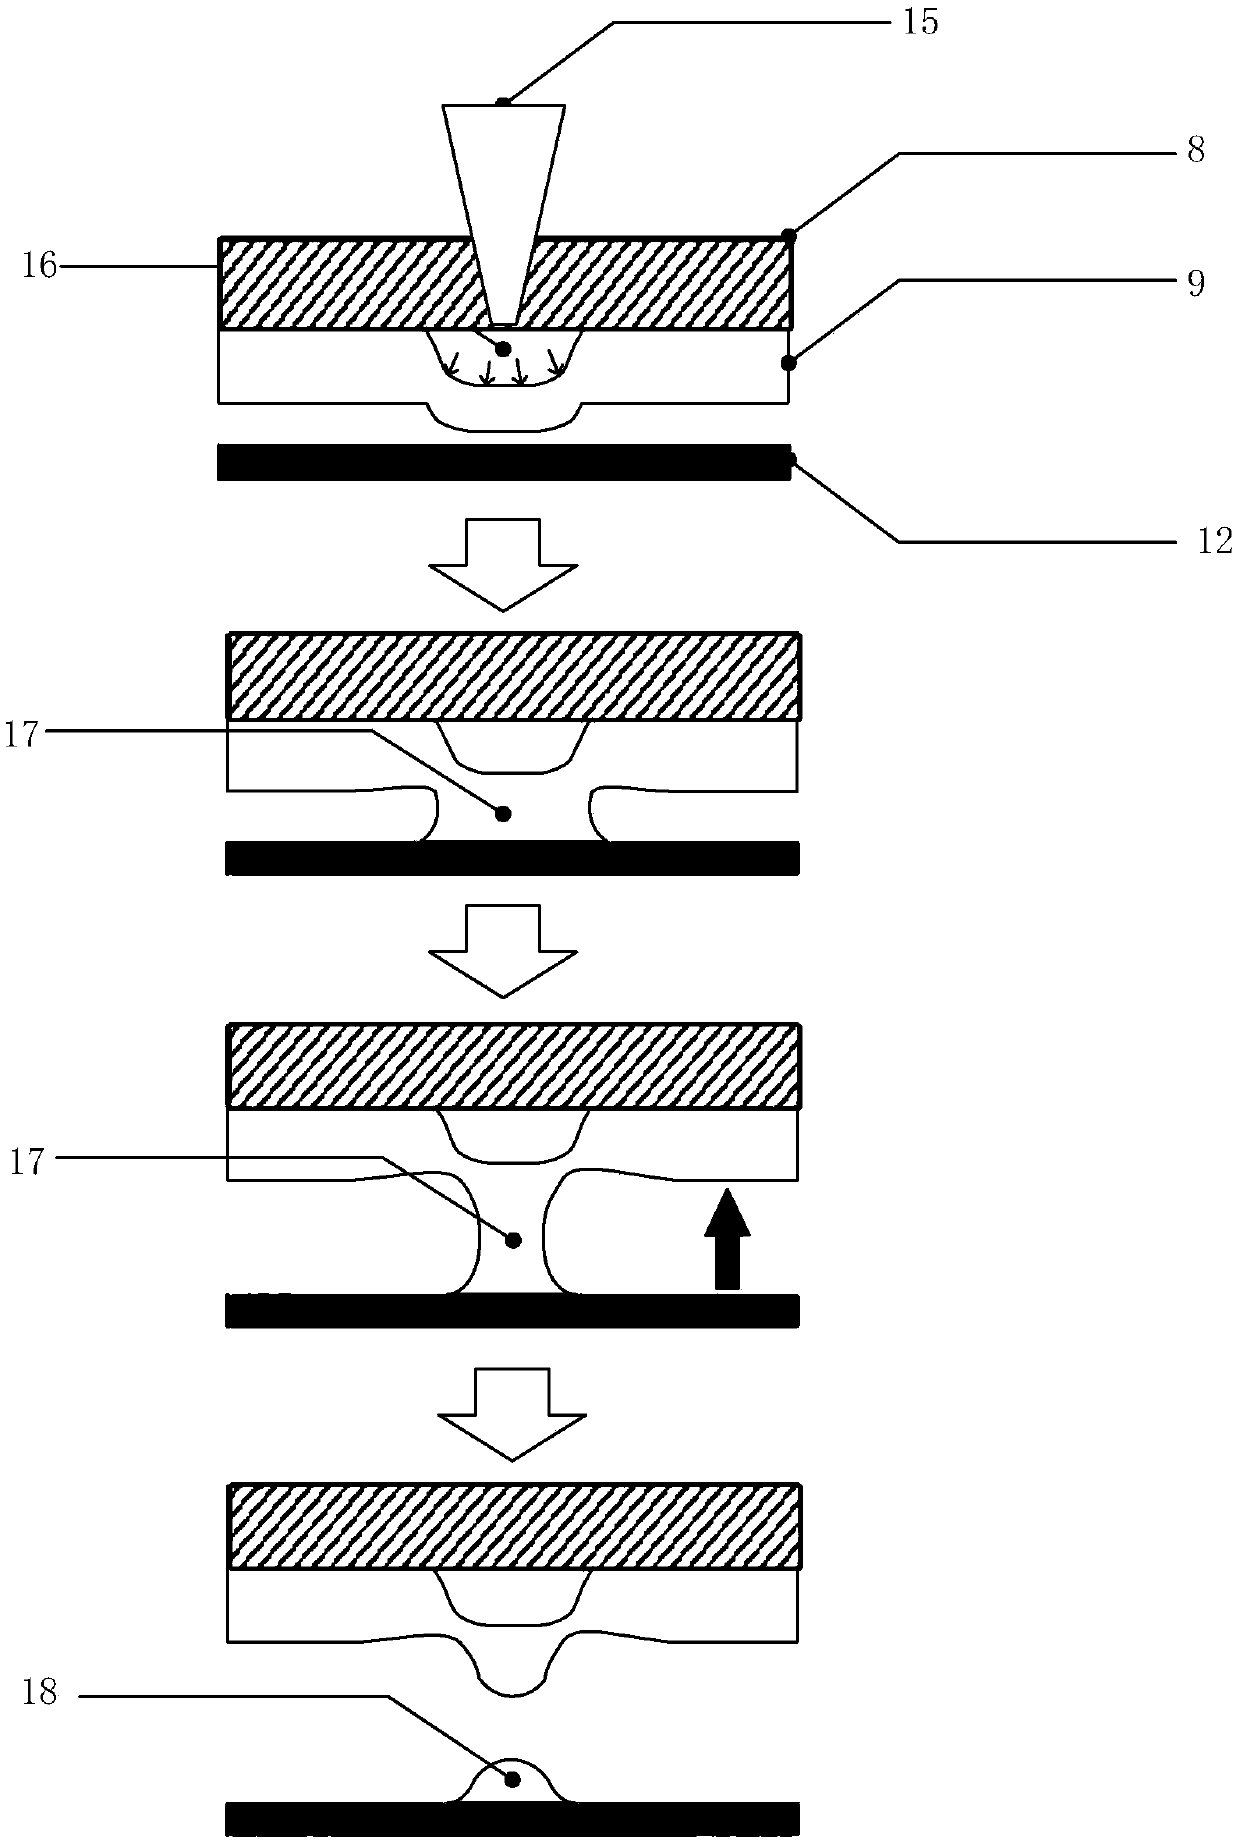 Solder paste laser-induced forward transfer device and method